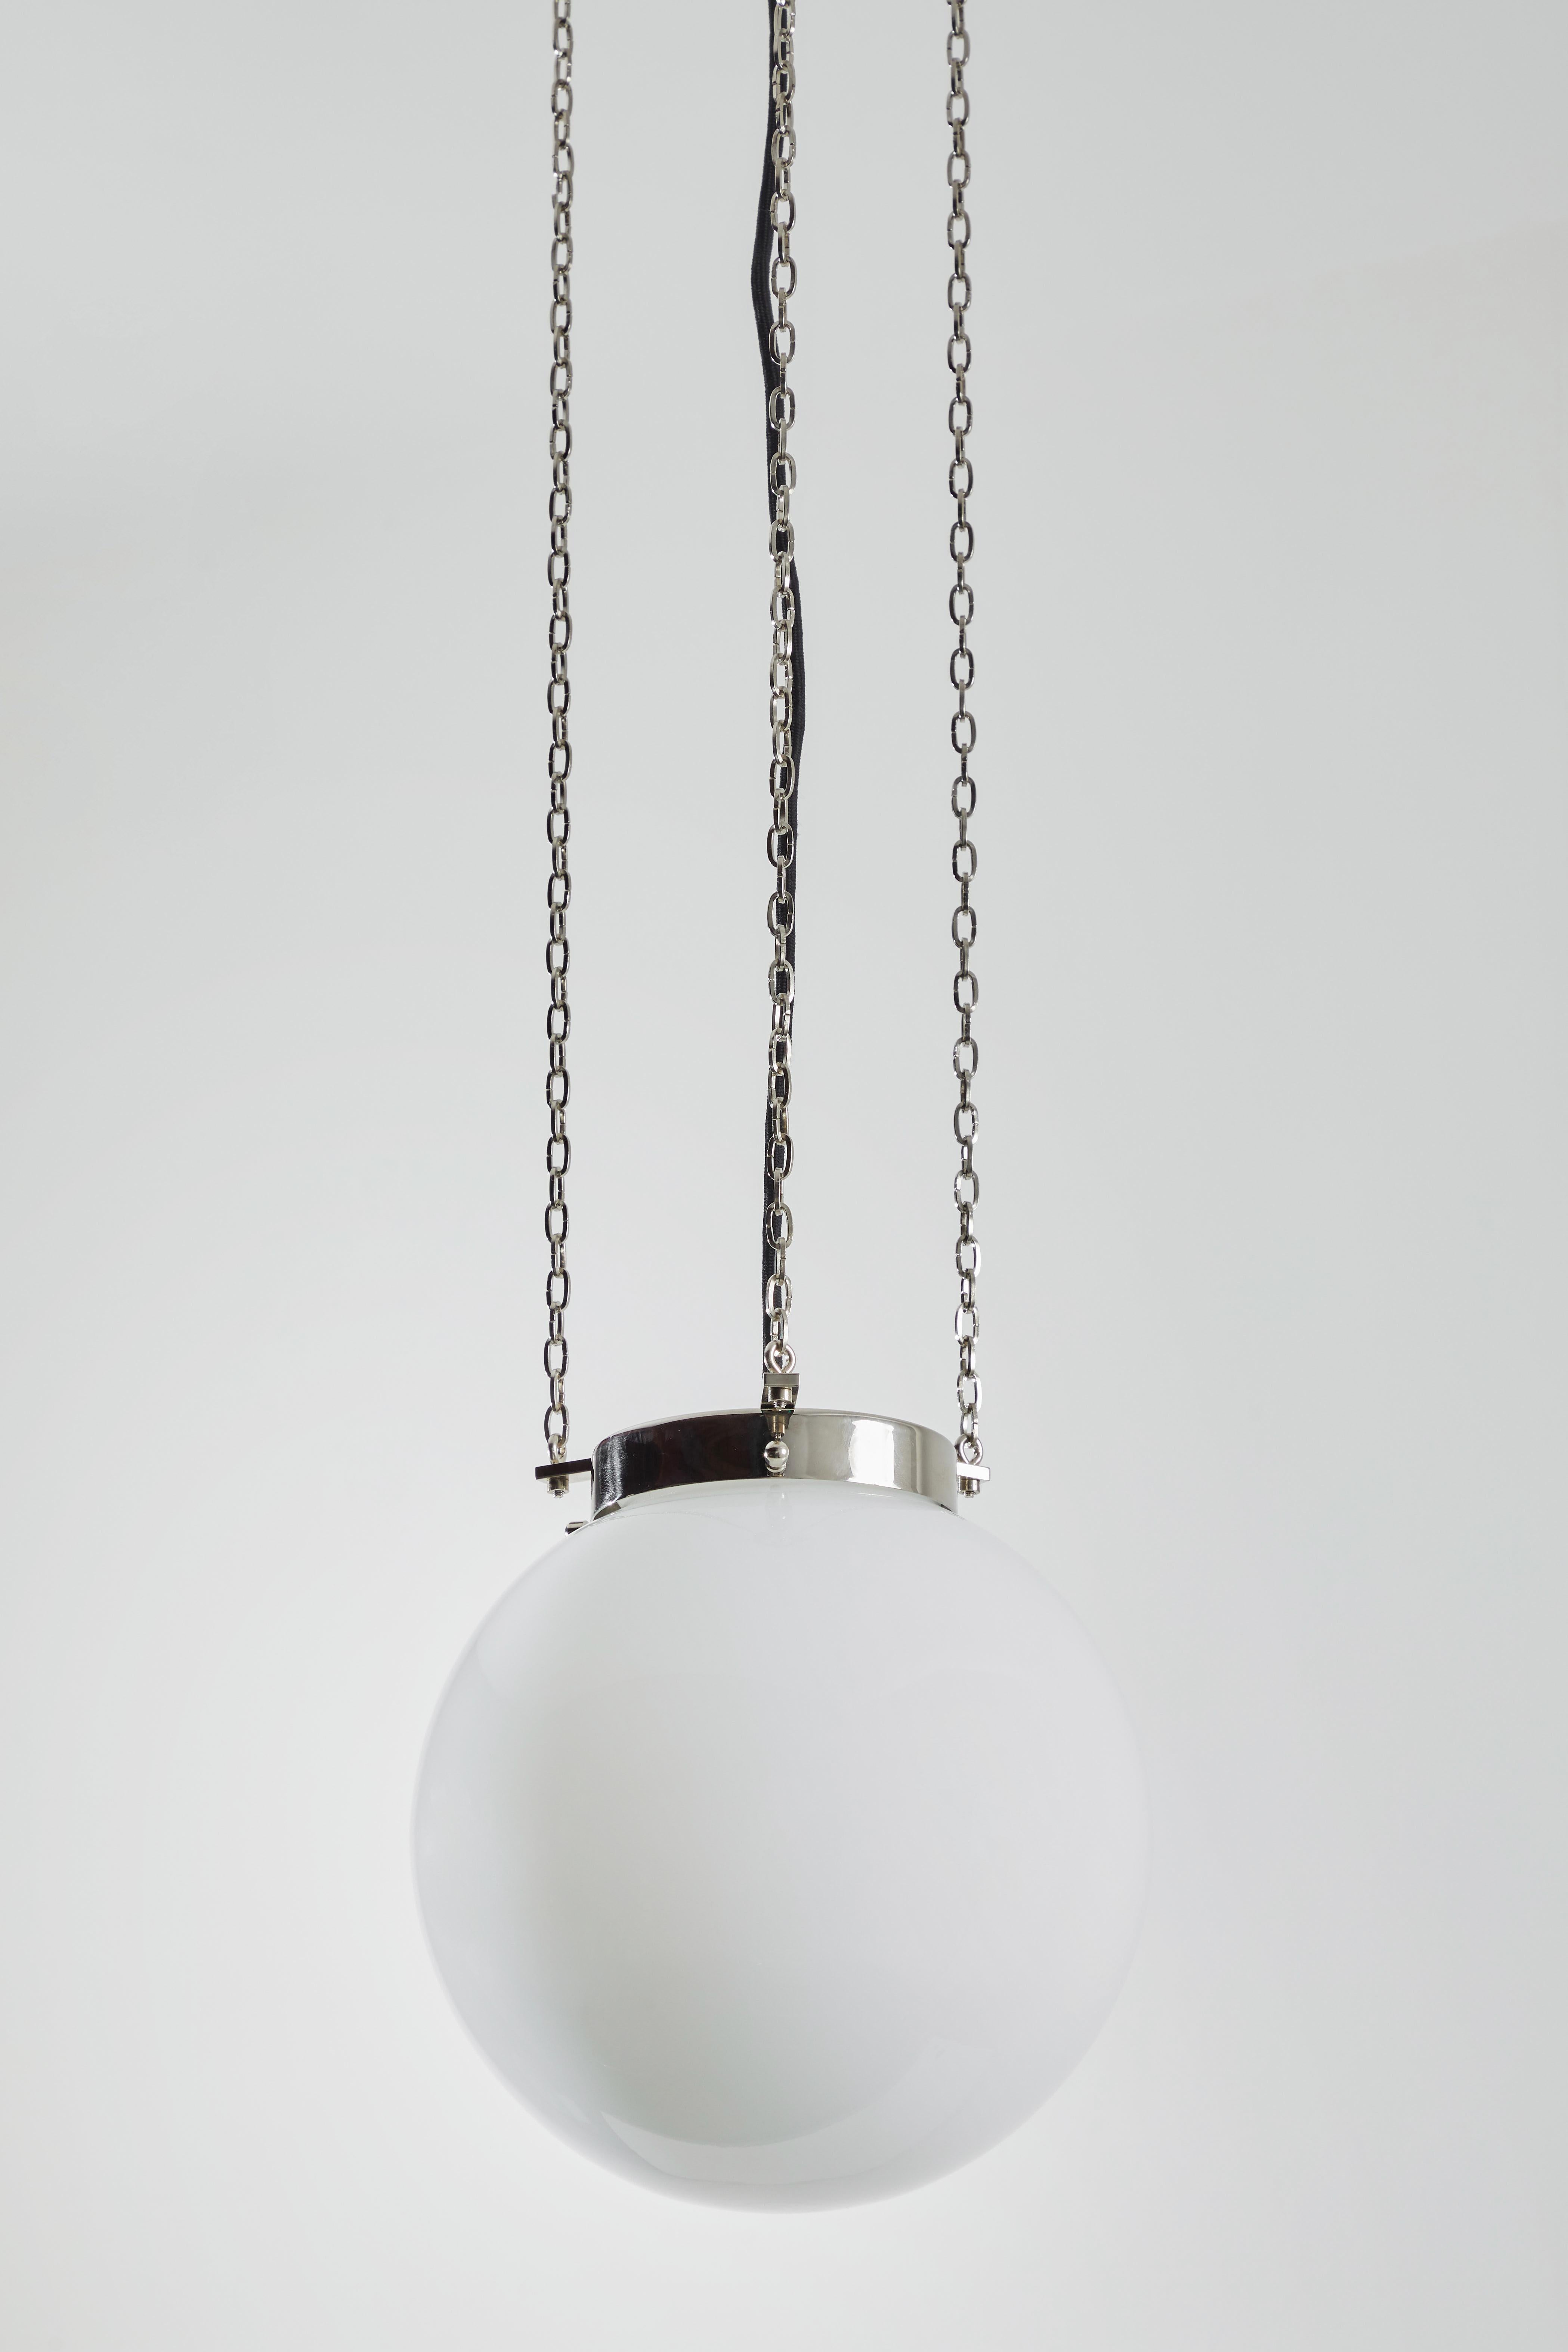 Model HMB 27/250 Bauhaus Suspension Light by Marianne Brandt For Sale 1